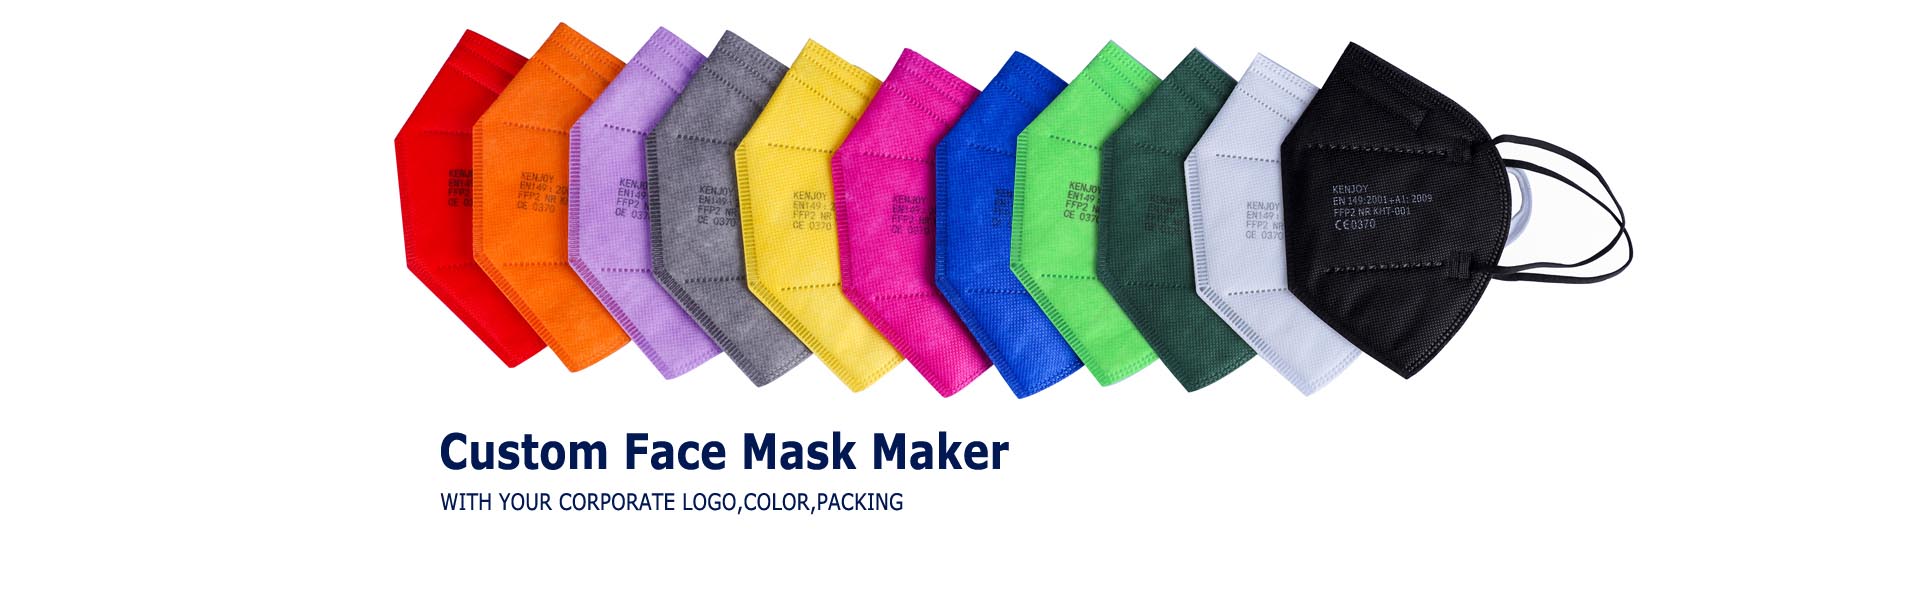 mask manufacturers-KENJOY